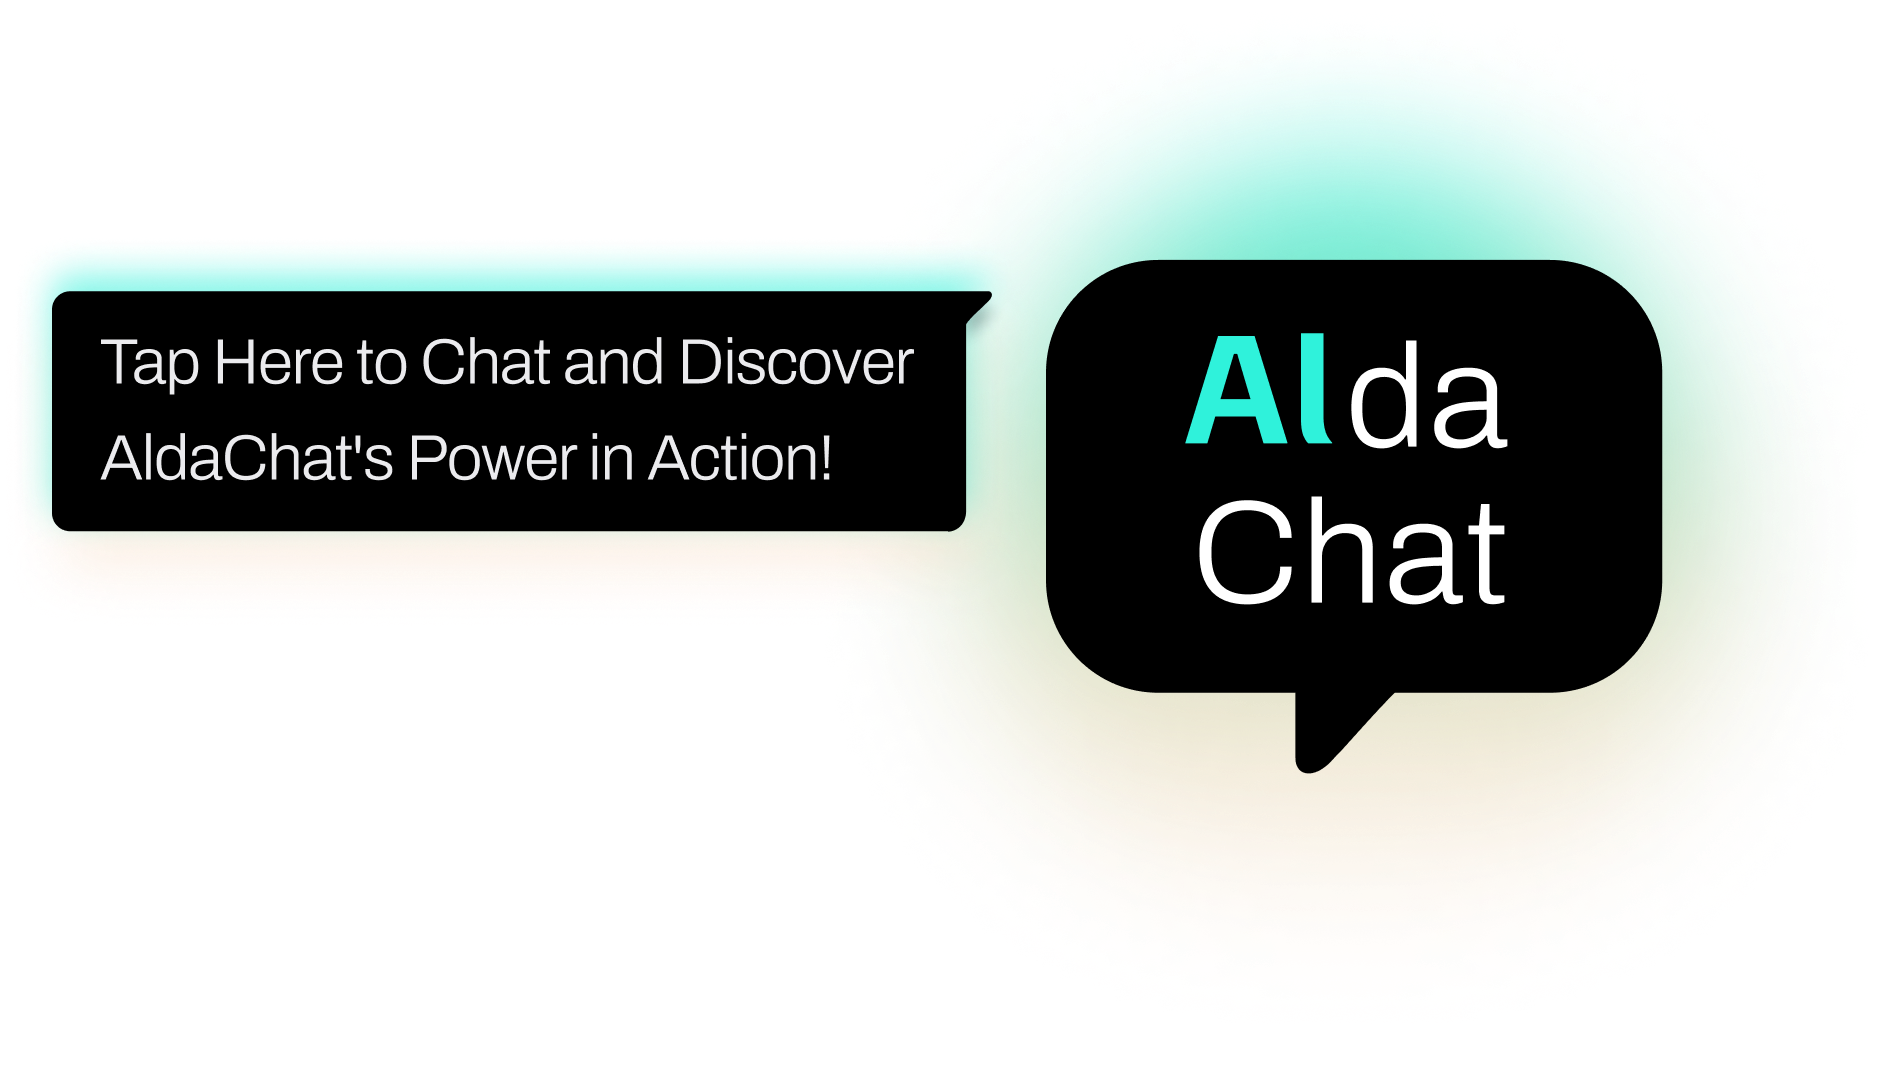 AldaChat Logo Image